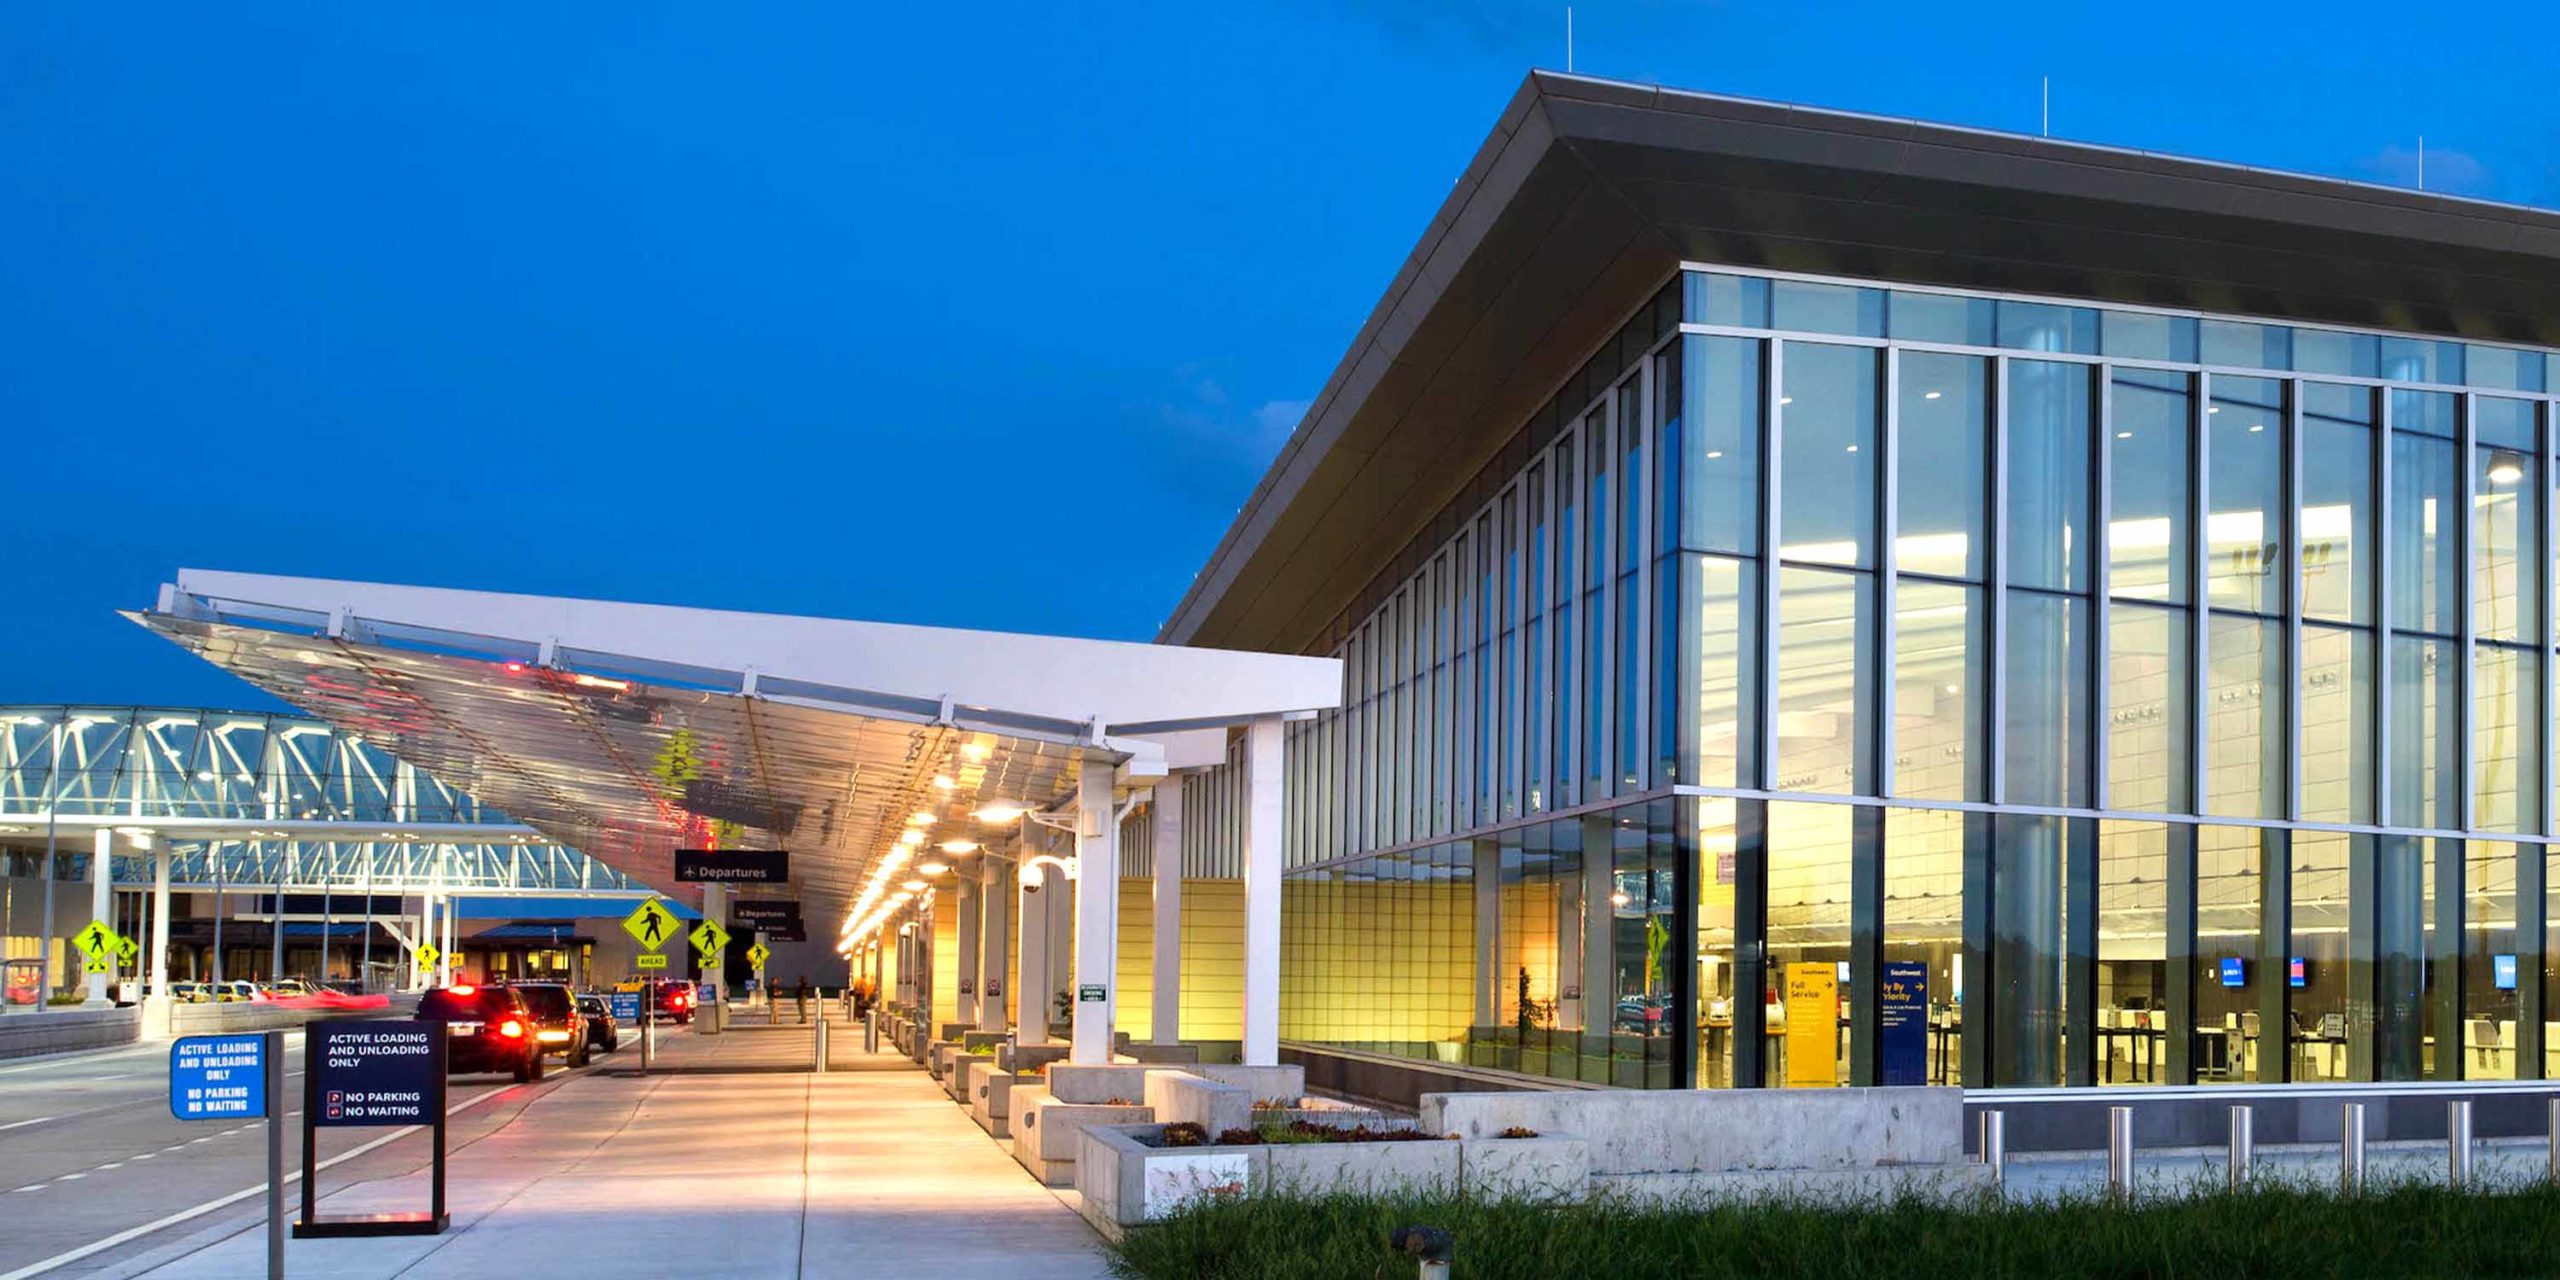 Wichita Dwight D. Eisenhower Airport: Canopy header image #5